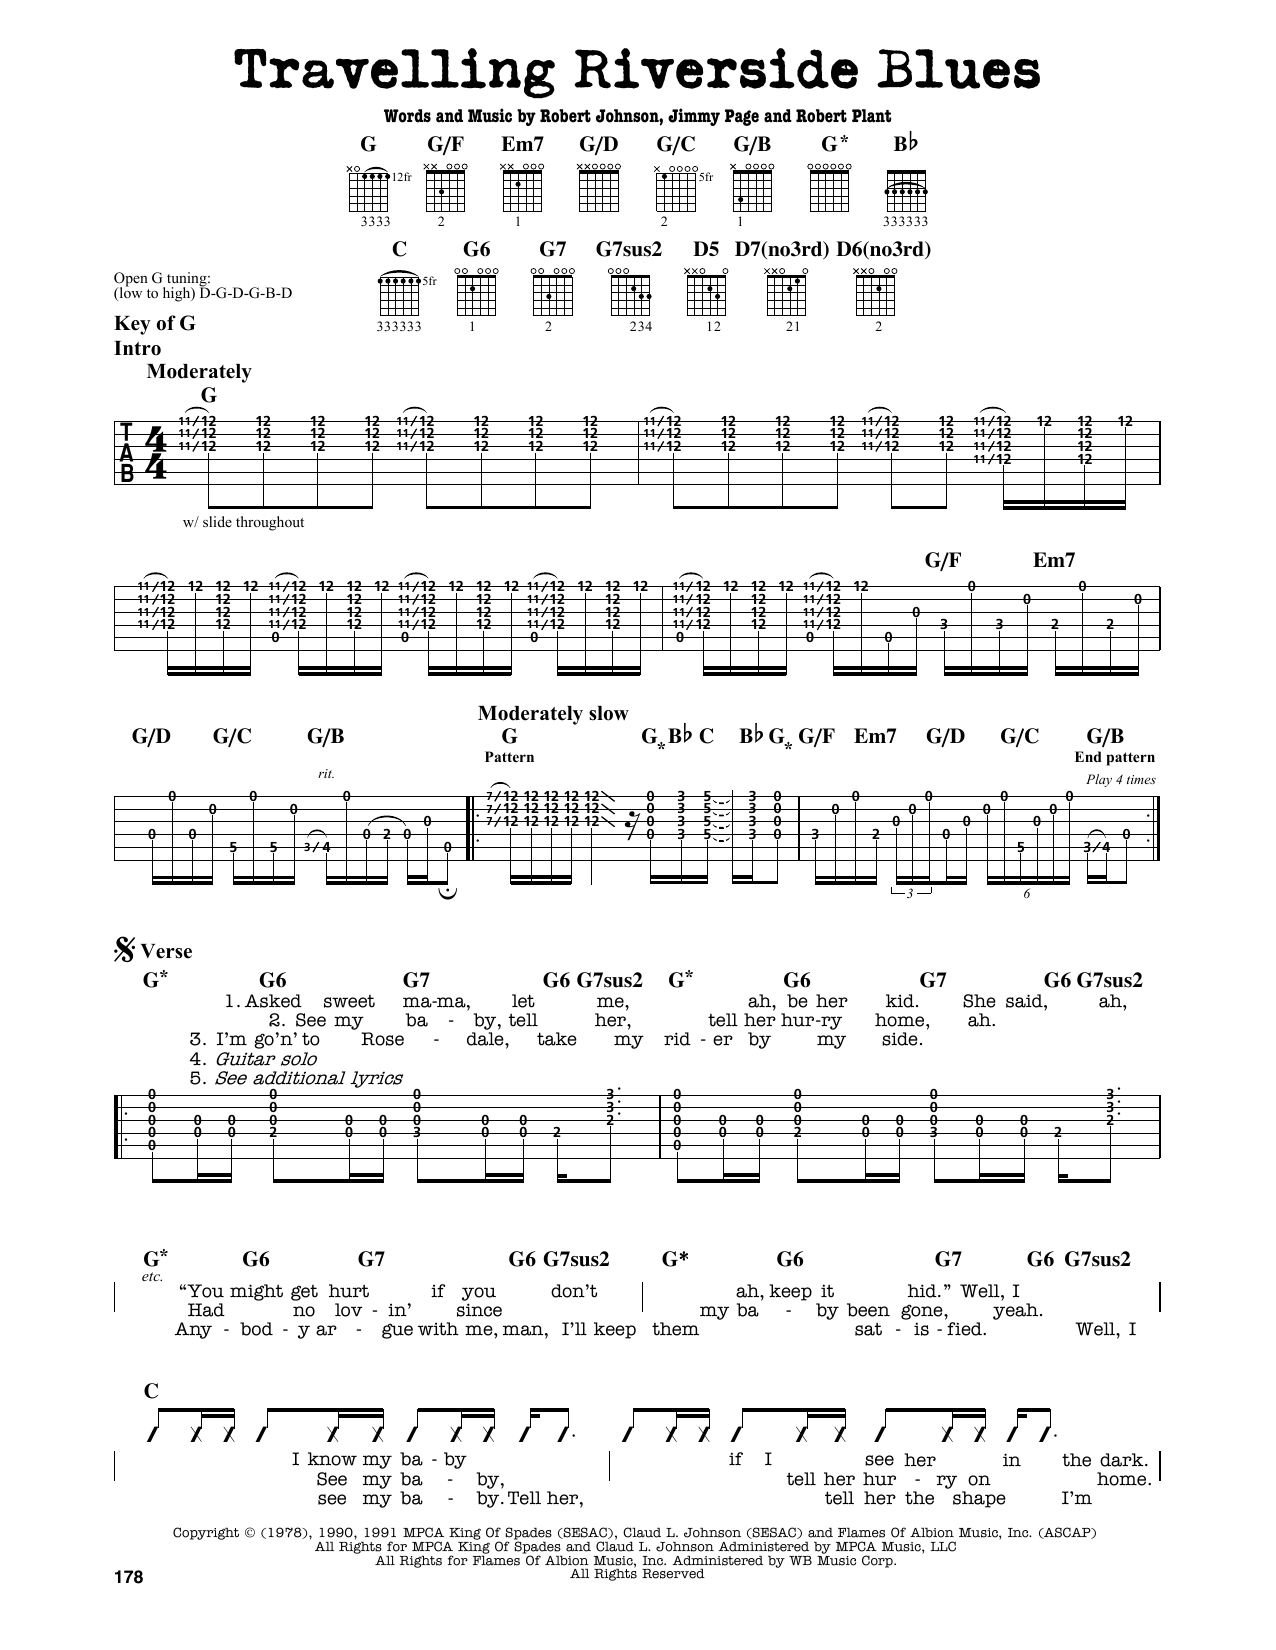 Led Zeppelin Travelling Riverside Blues Sheet Music Notes & Chords for Guitar Lead Sheet - Download or Print PDF